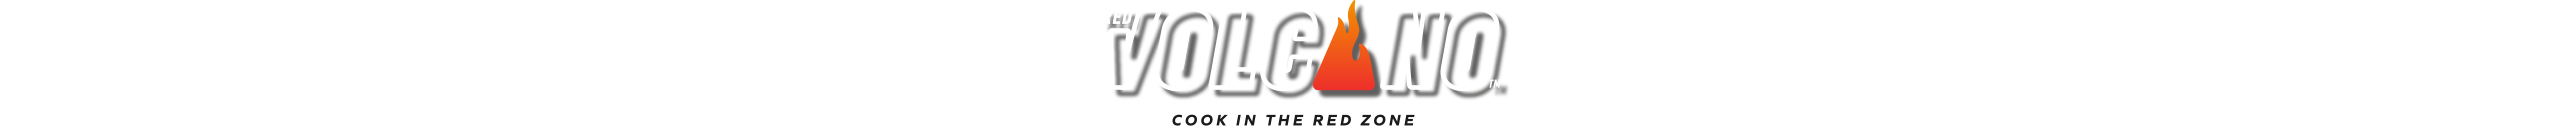 red volcano logo